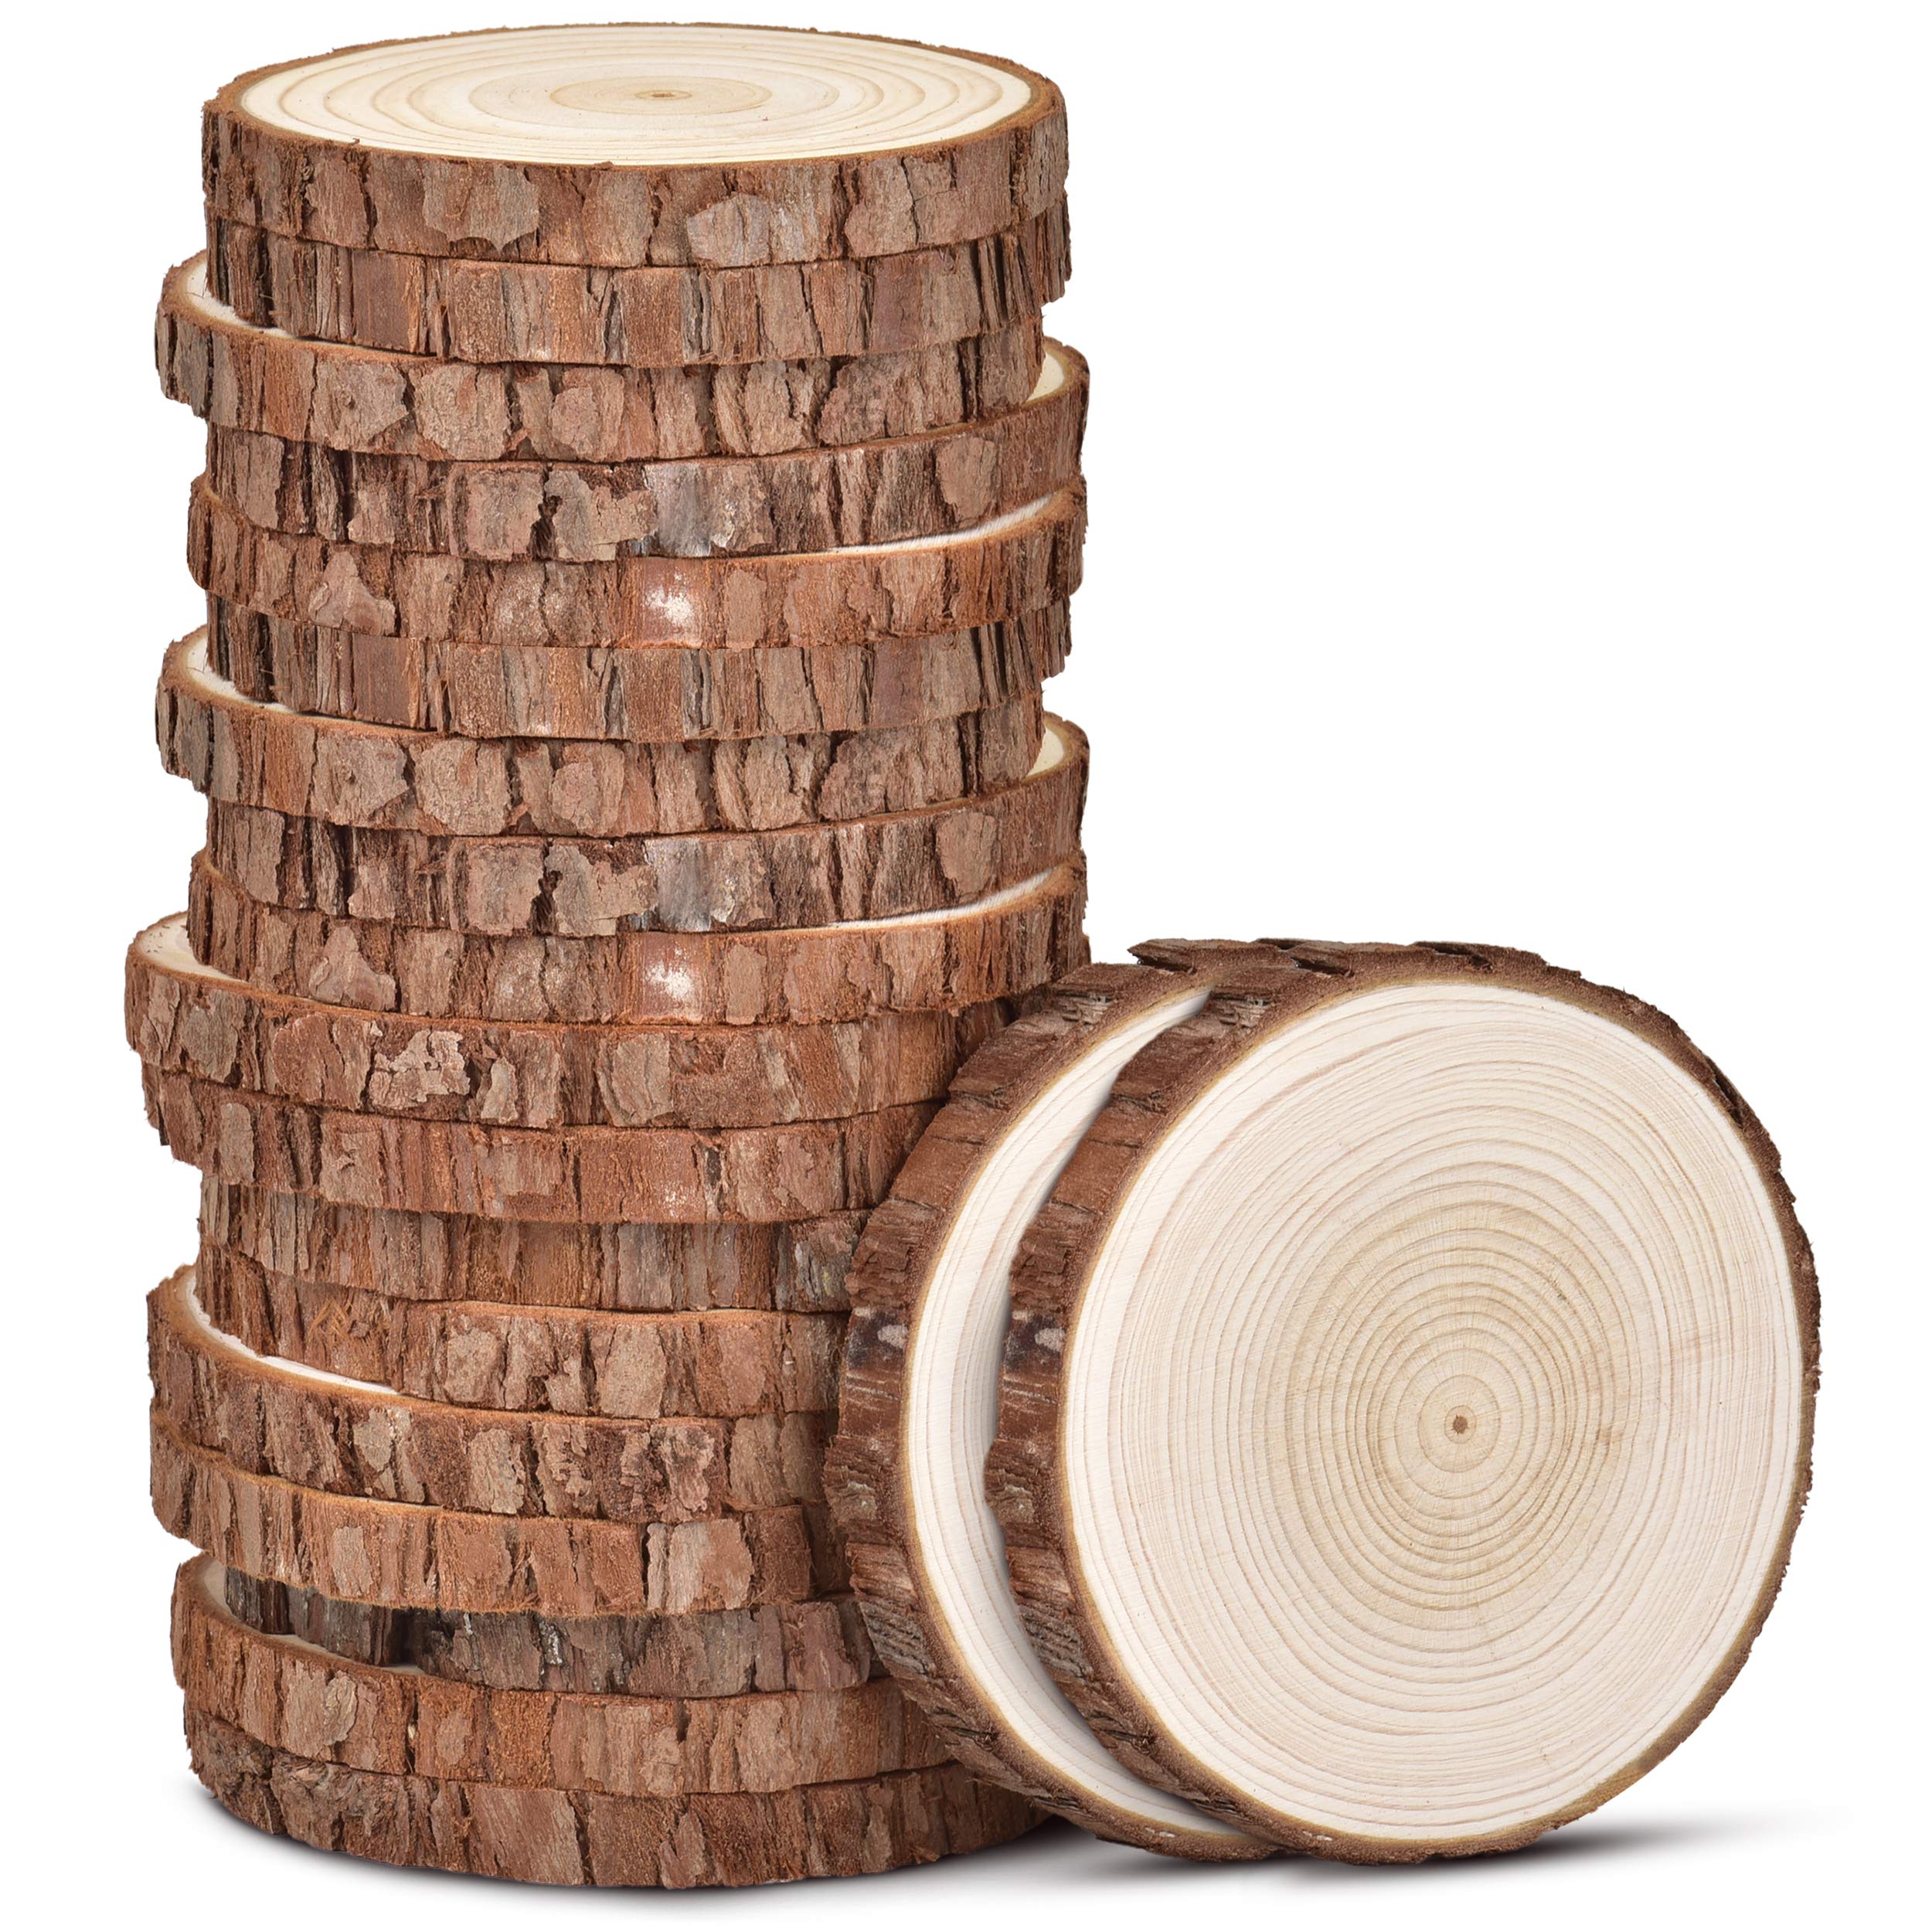 Natural Wood Coasters, With Bark, Tree Wood